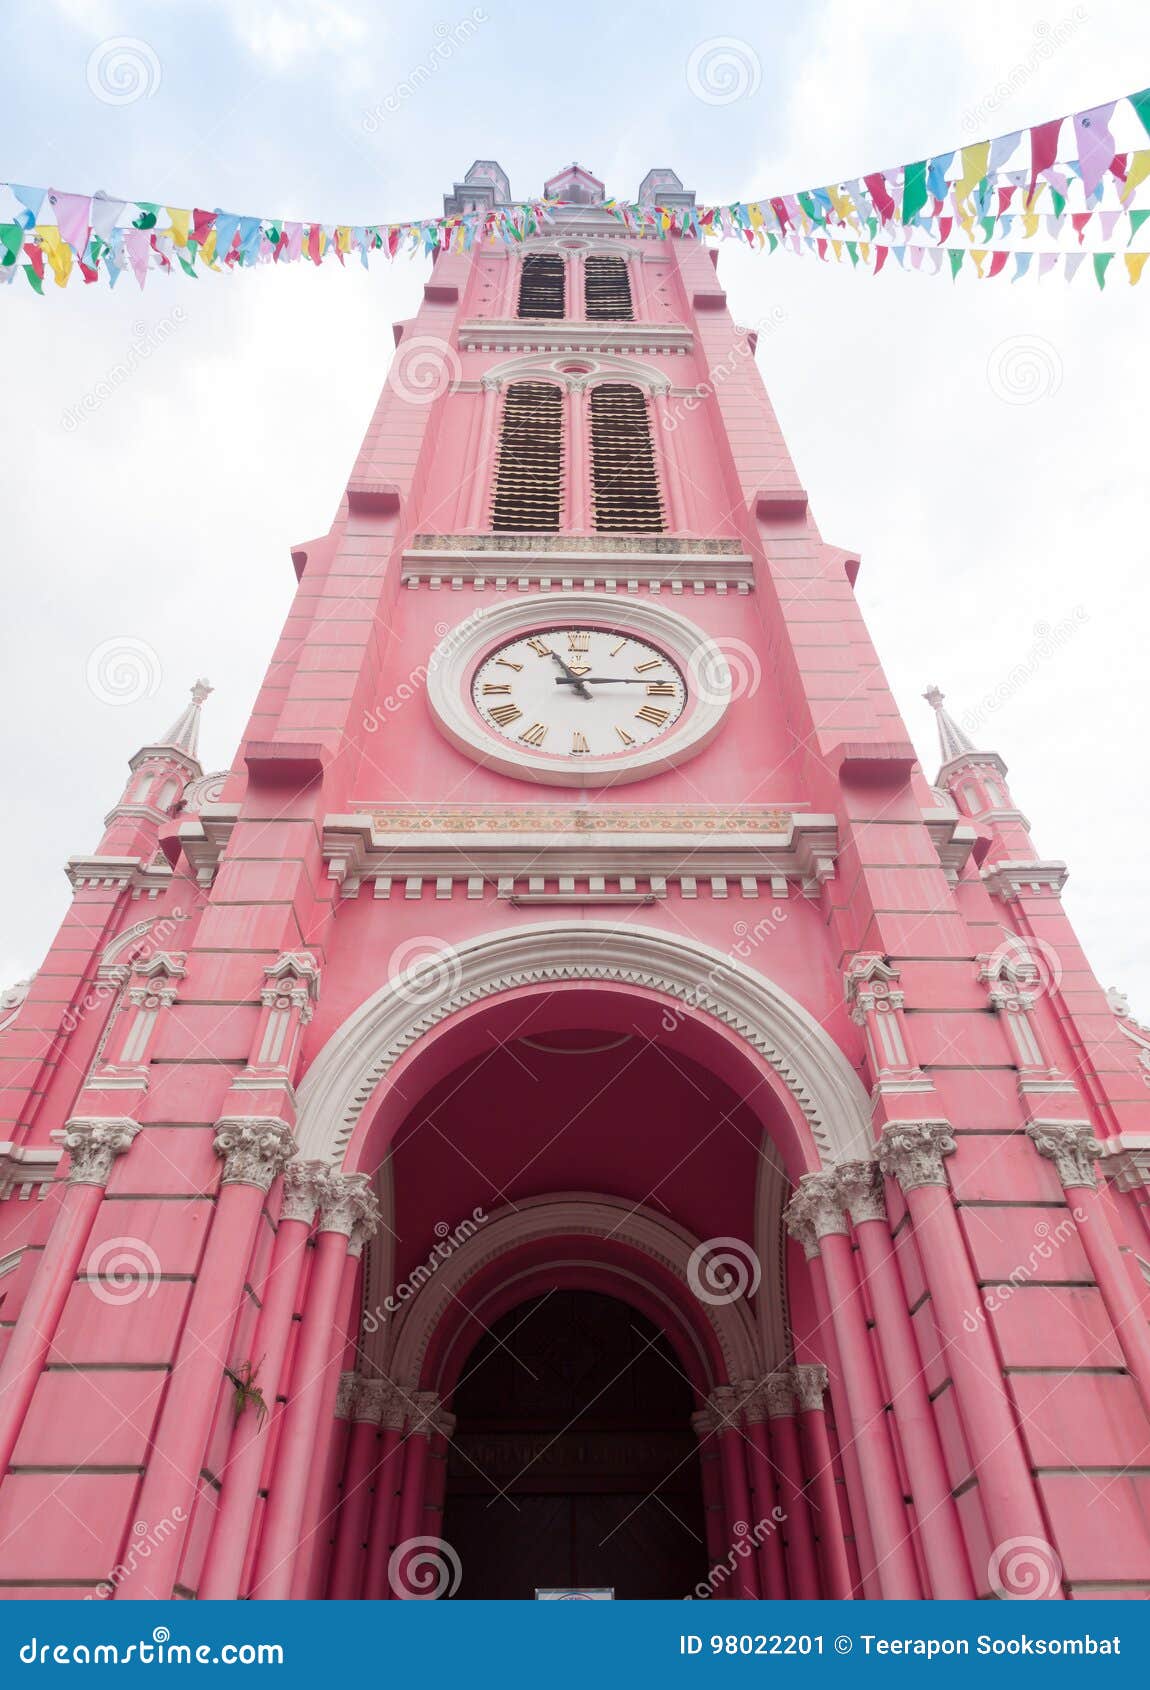 tan dinh church - the pink catholic church in ho chi minh city,